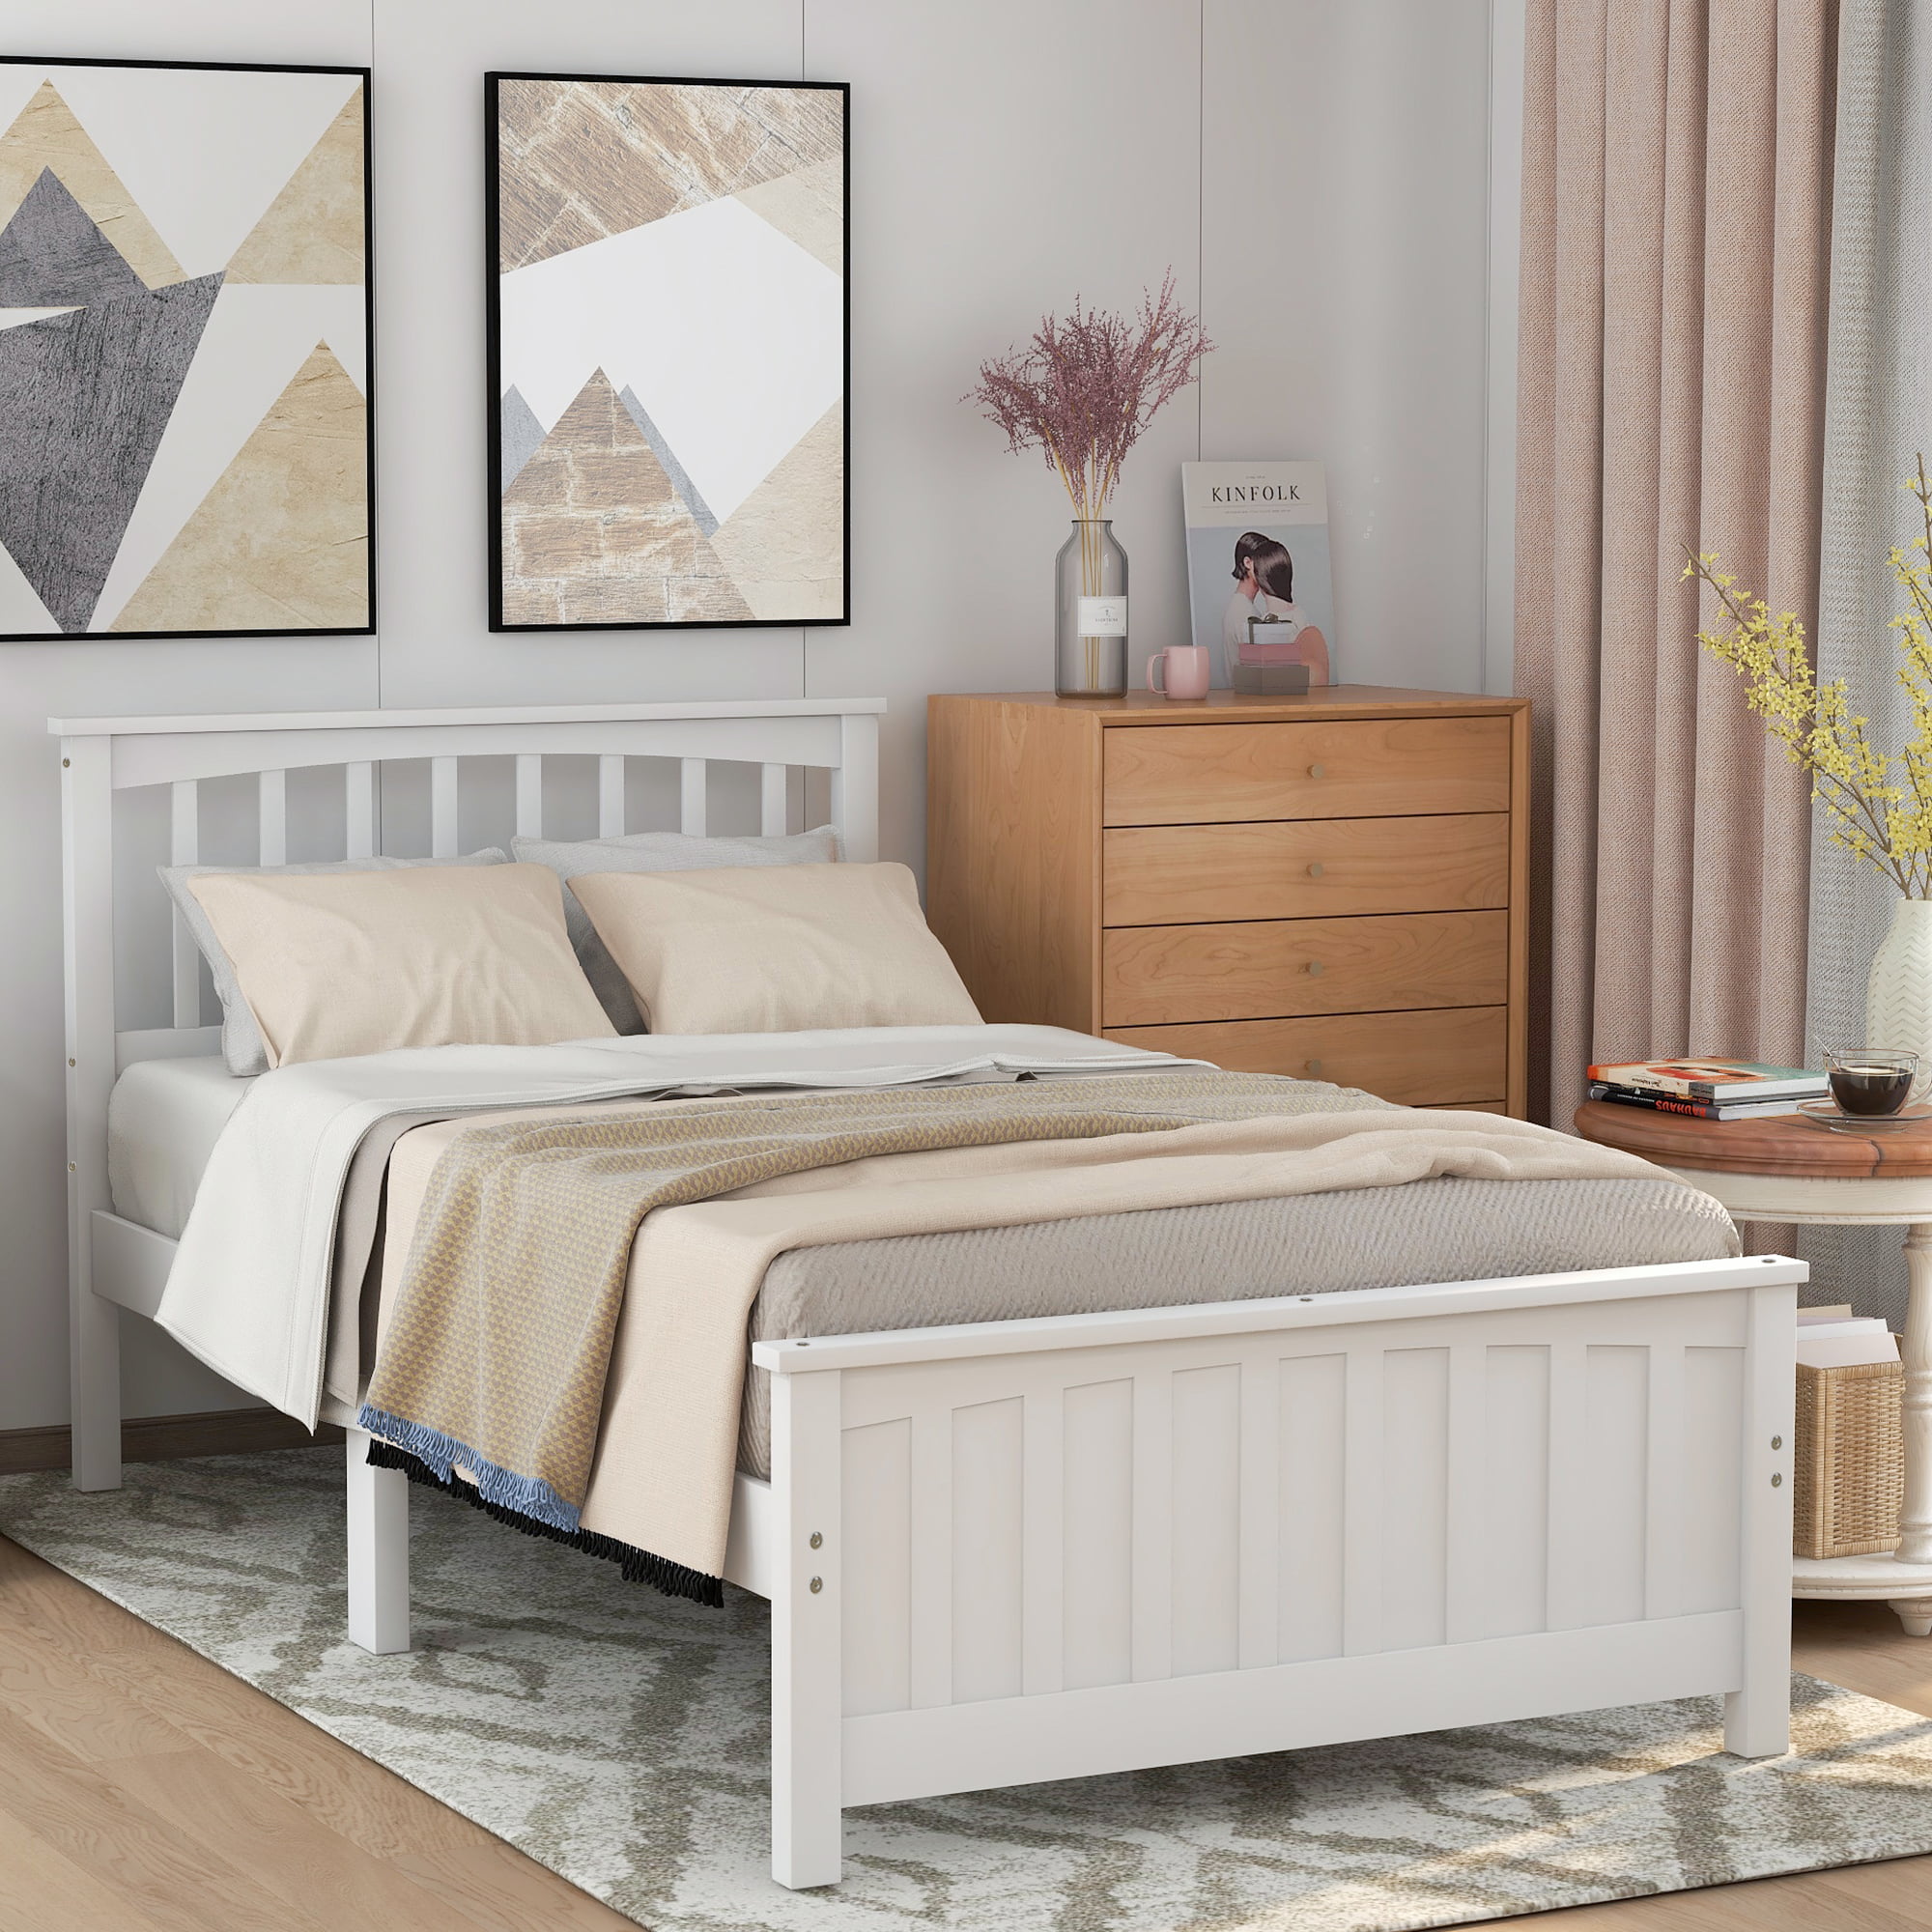 Clearance! Twin Bed Frames for Kids, Mordern Platform Bed Frame with